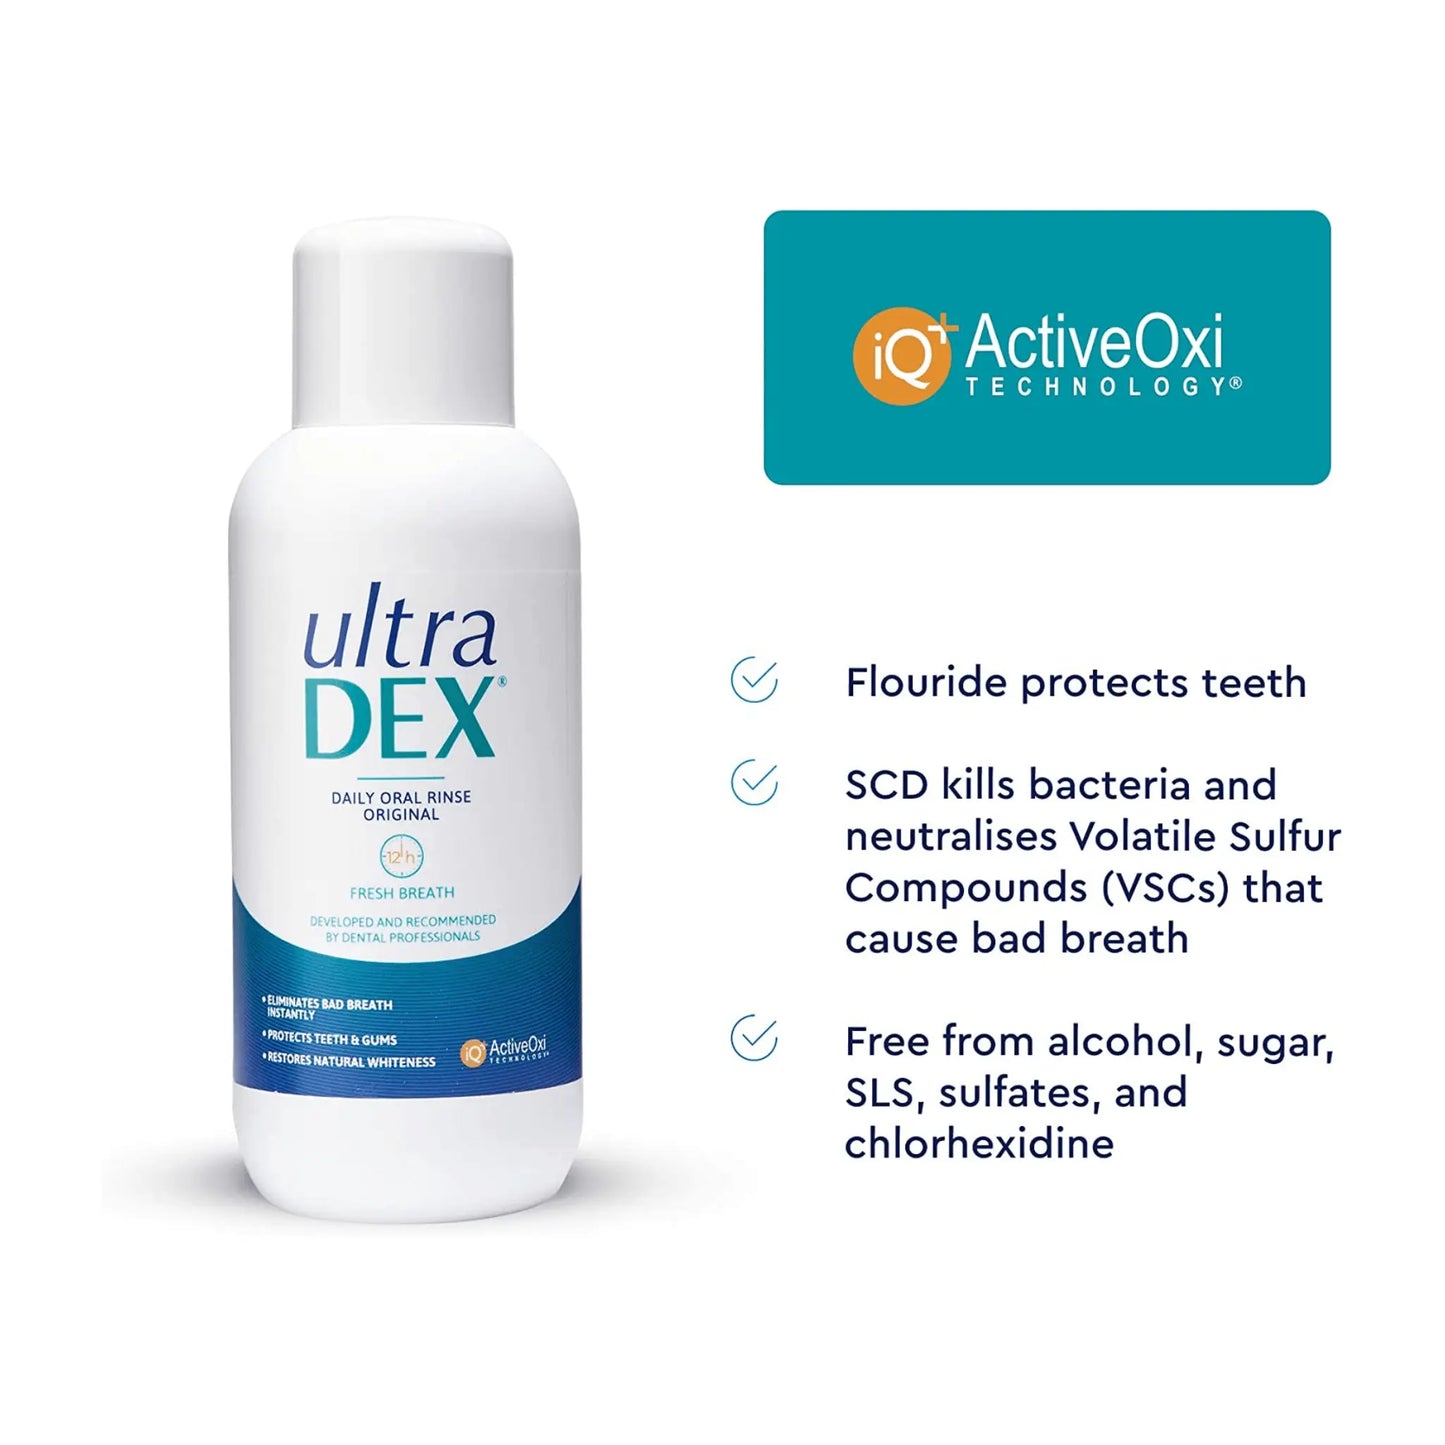 Ultradex 500ml Daily Oral Rinse